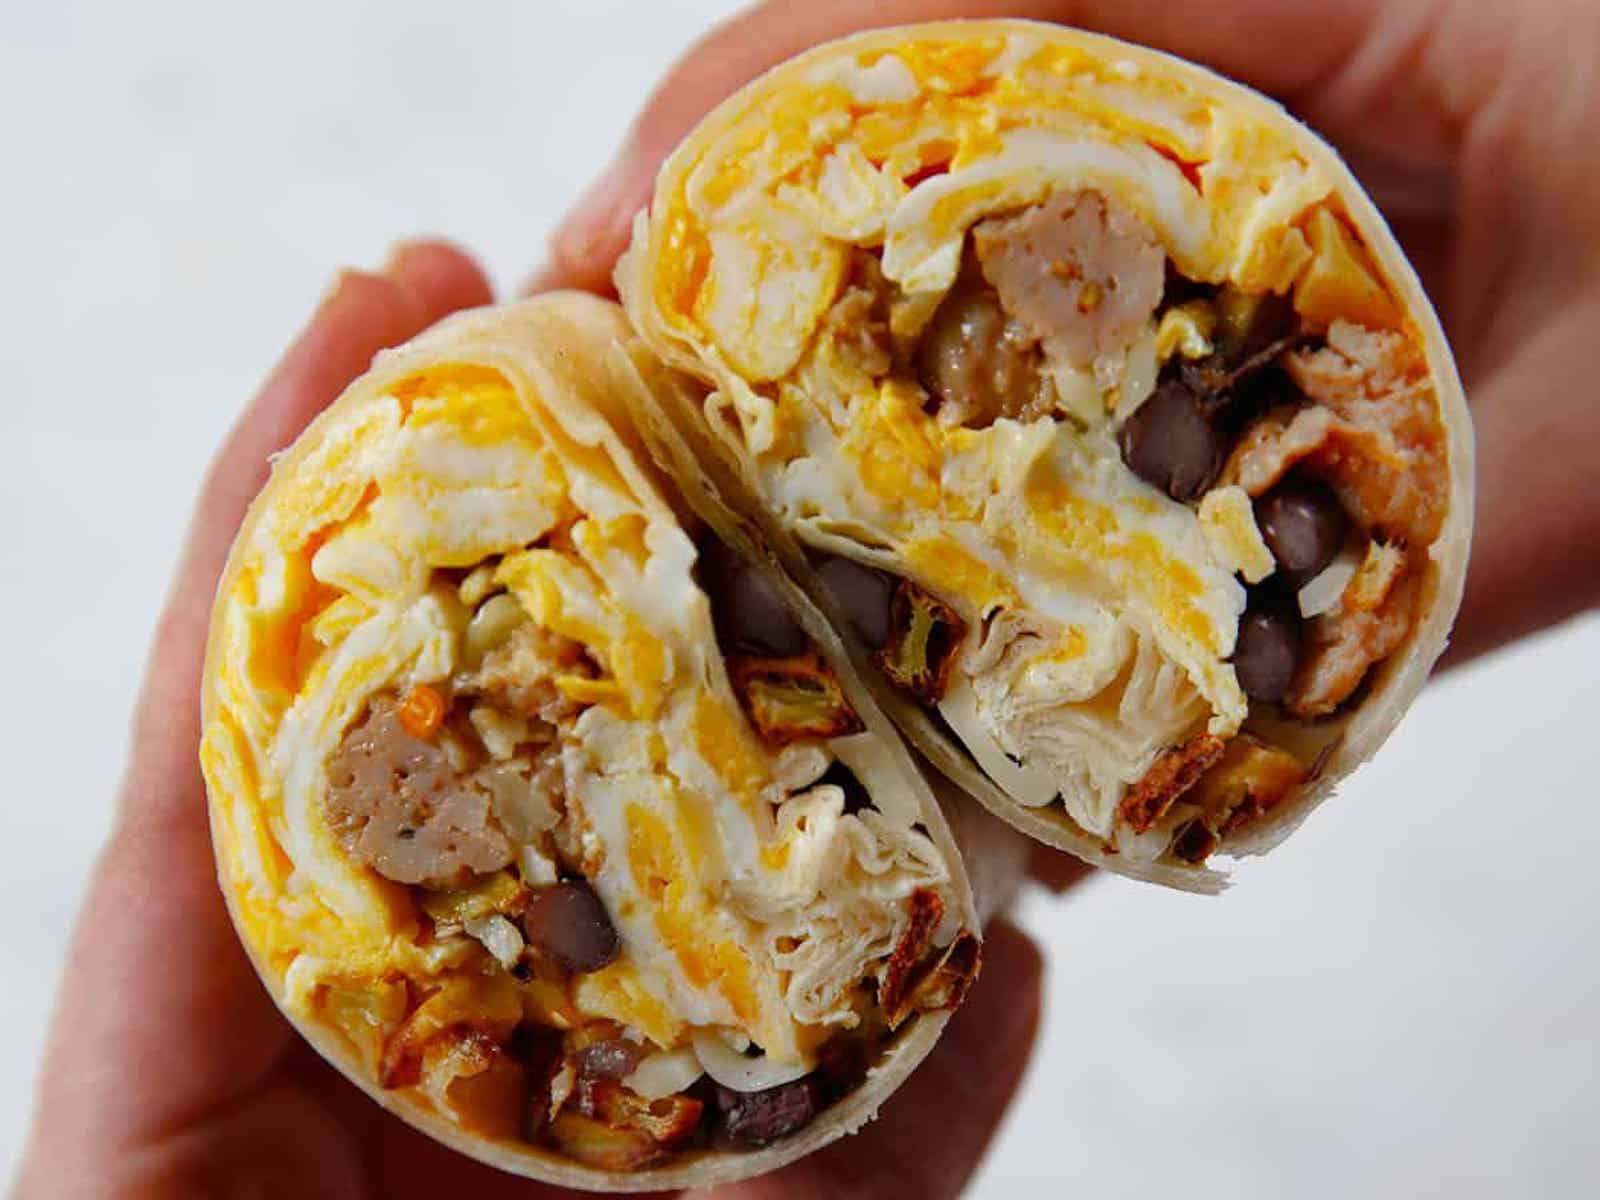 healthy breakfast burrito recipes: lexi's clean kitchen